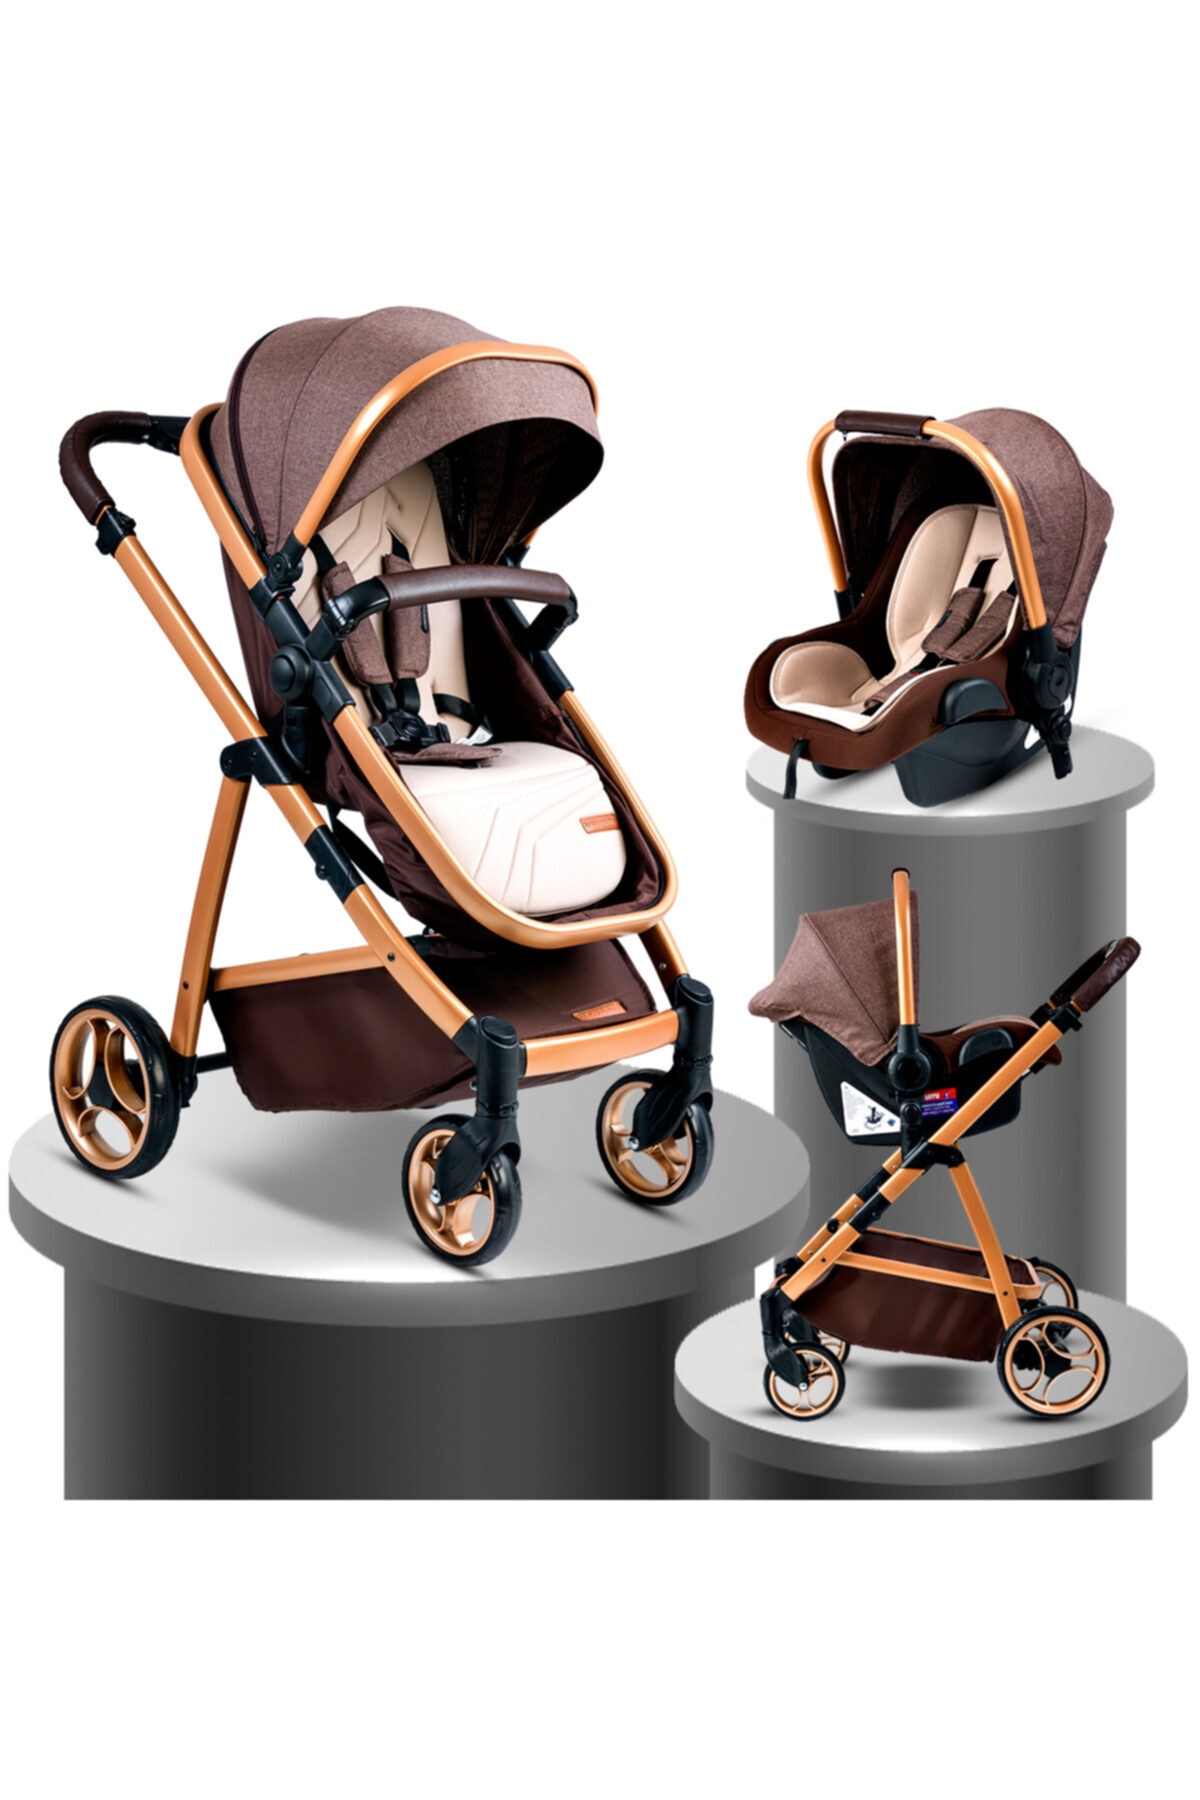 Baby Home Kahverengi Bh 955 Gold Vip Travel Sistem Bebek Arabası ve Puset